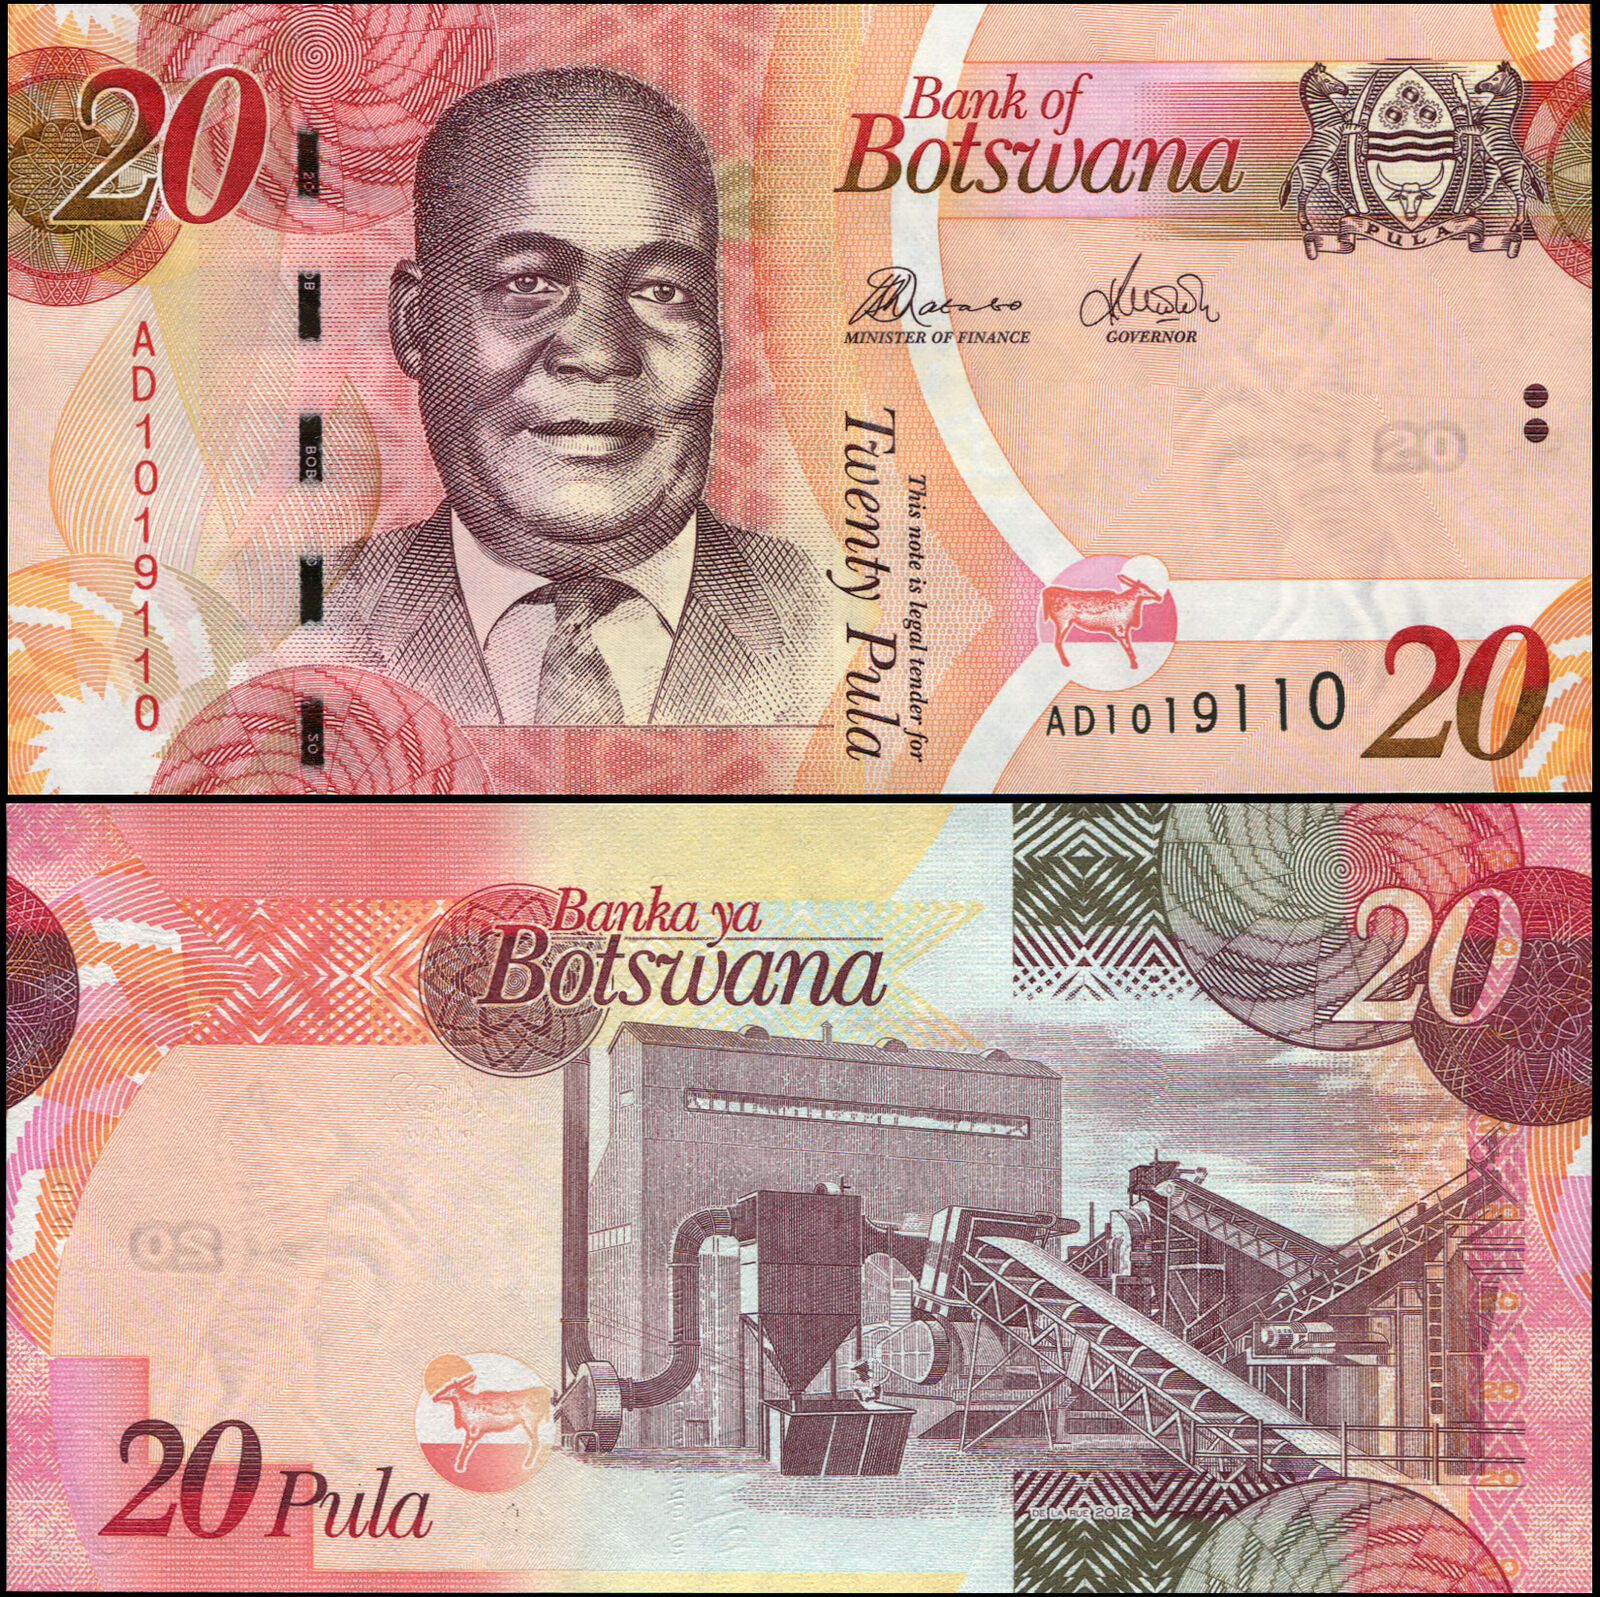 Botswana Banknote 20 Pula - P.31c 2012 Unc